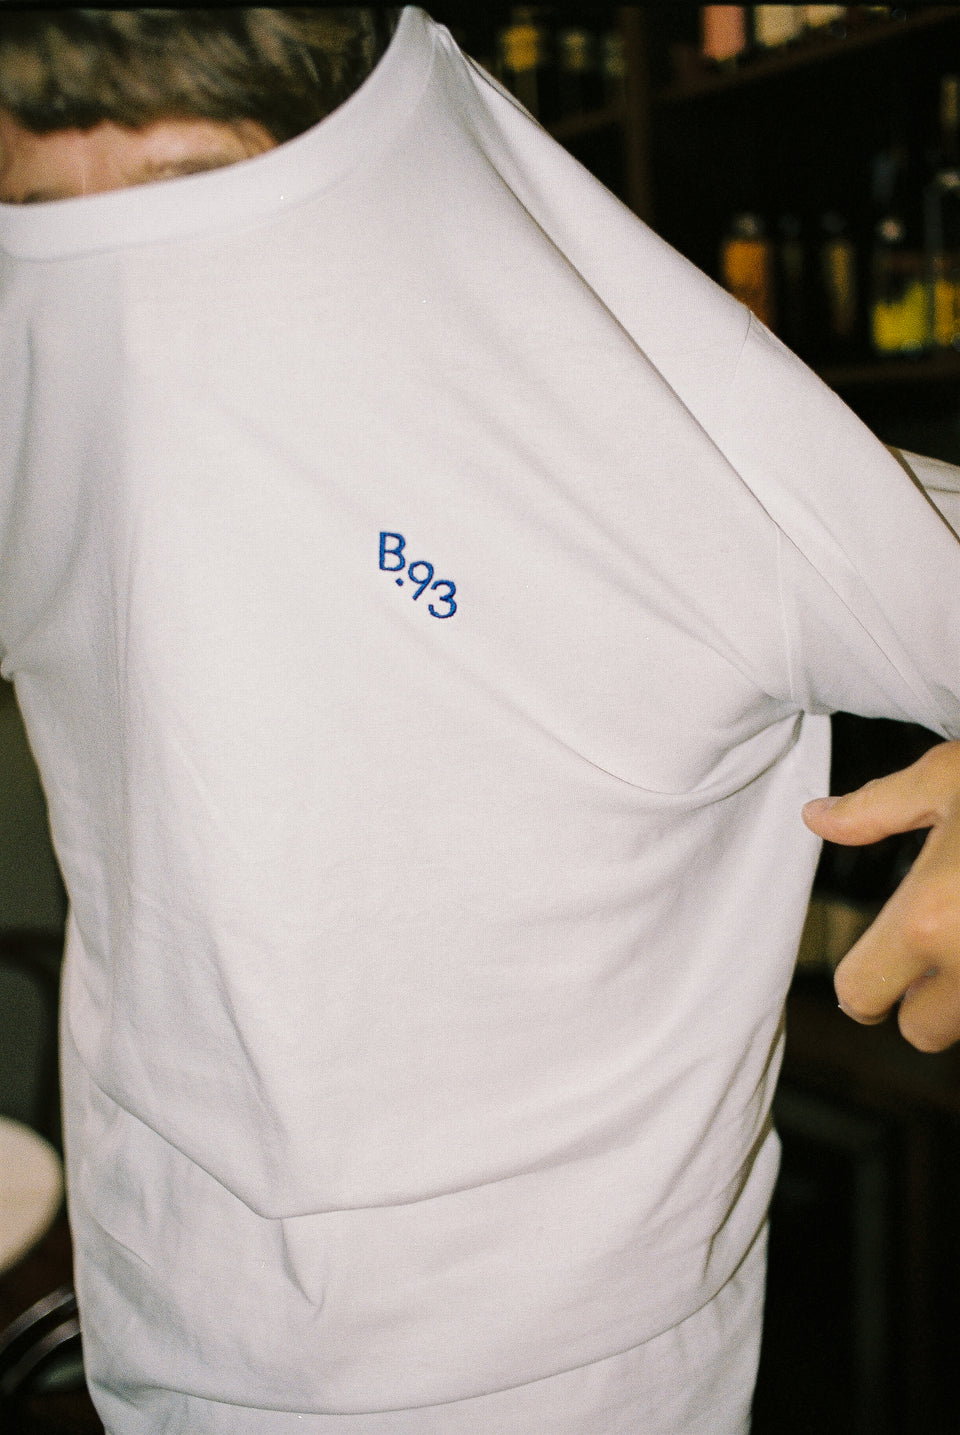 B.93 T-shirt